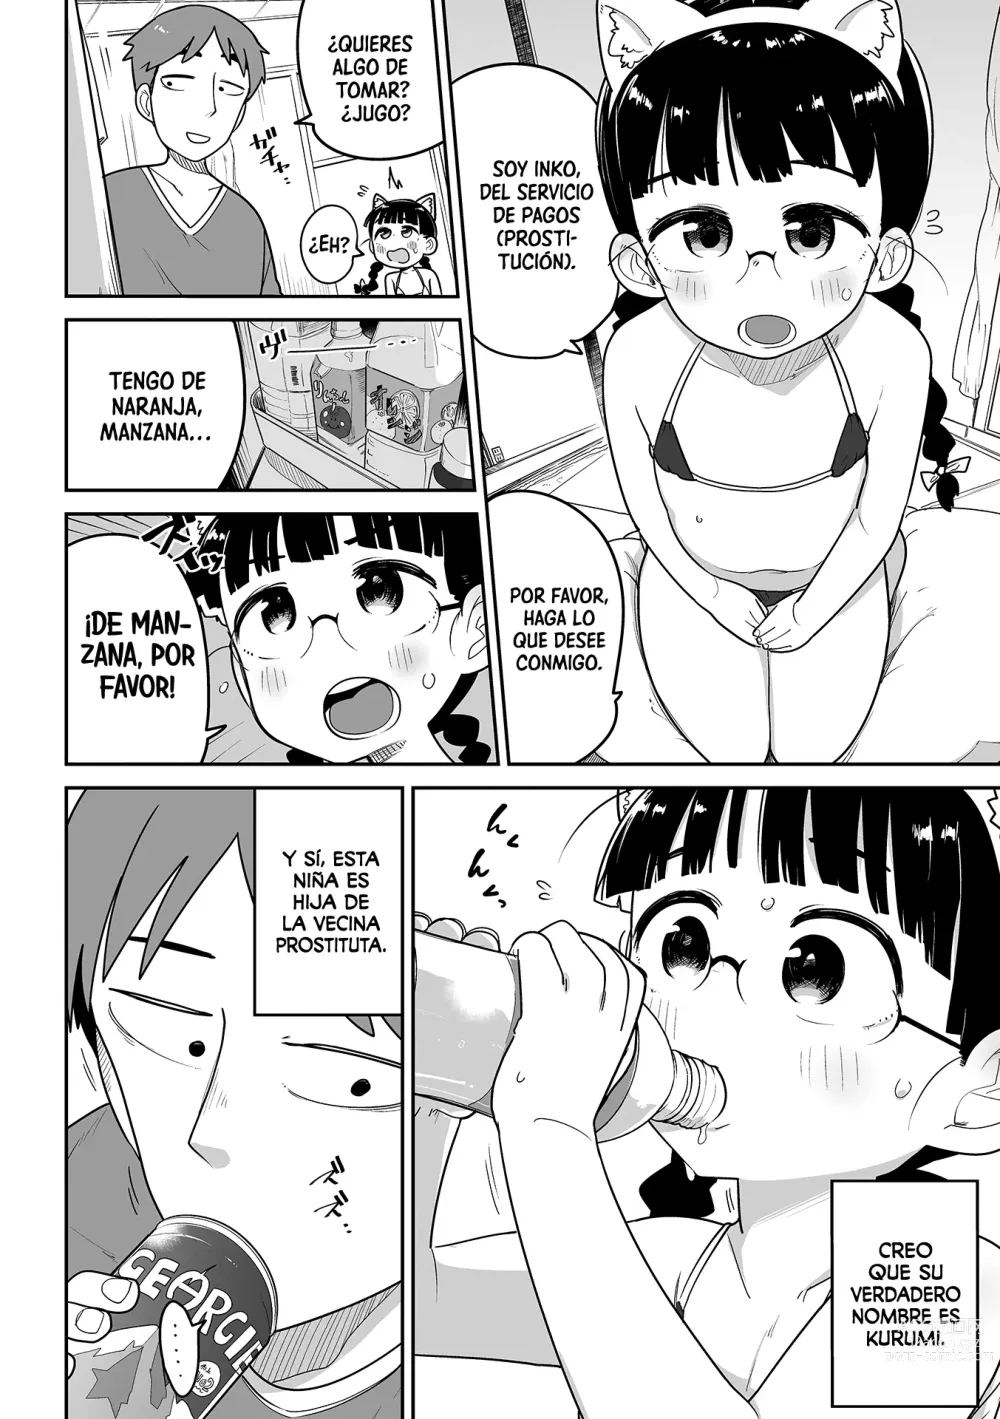 Page 2 of manga Servicio de Pagos Inko